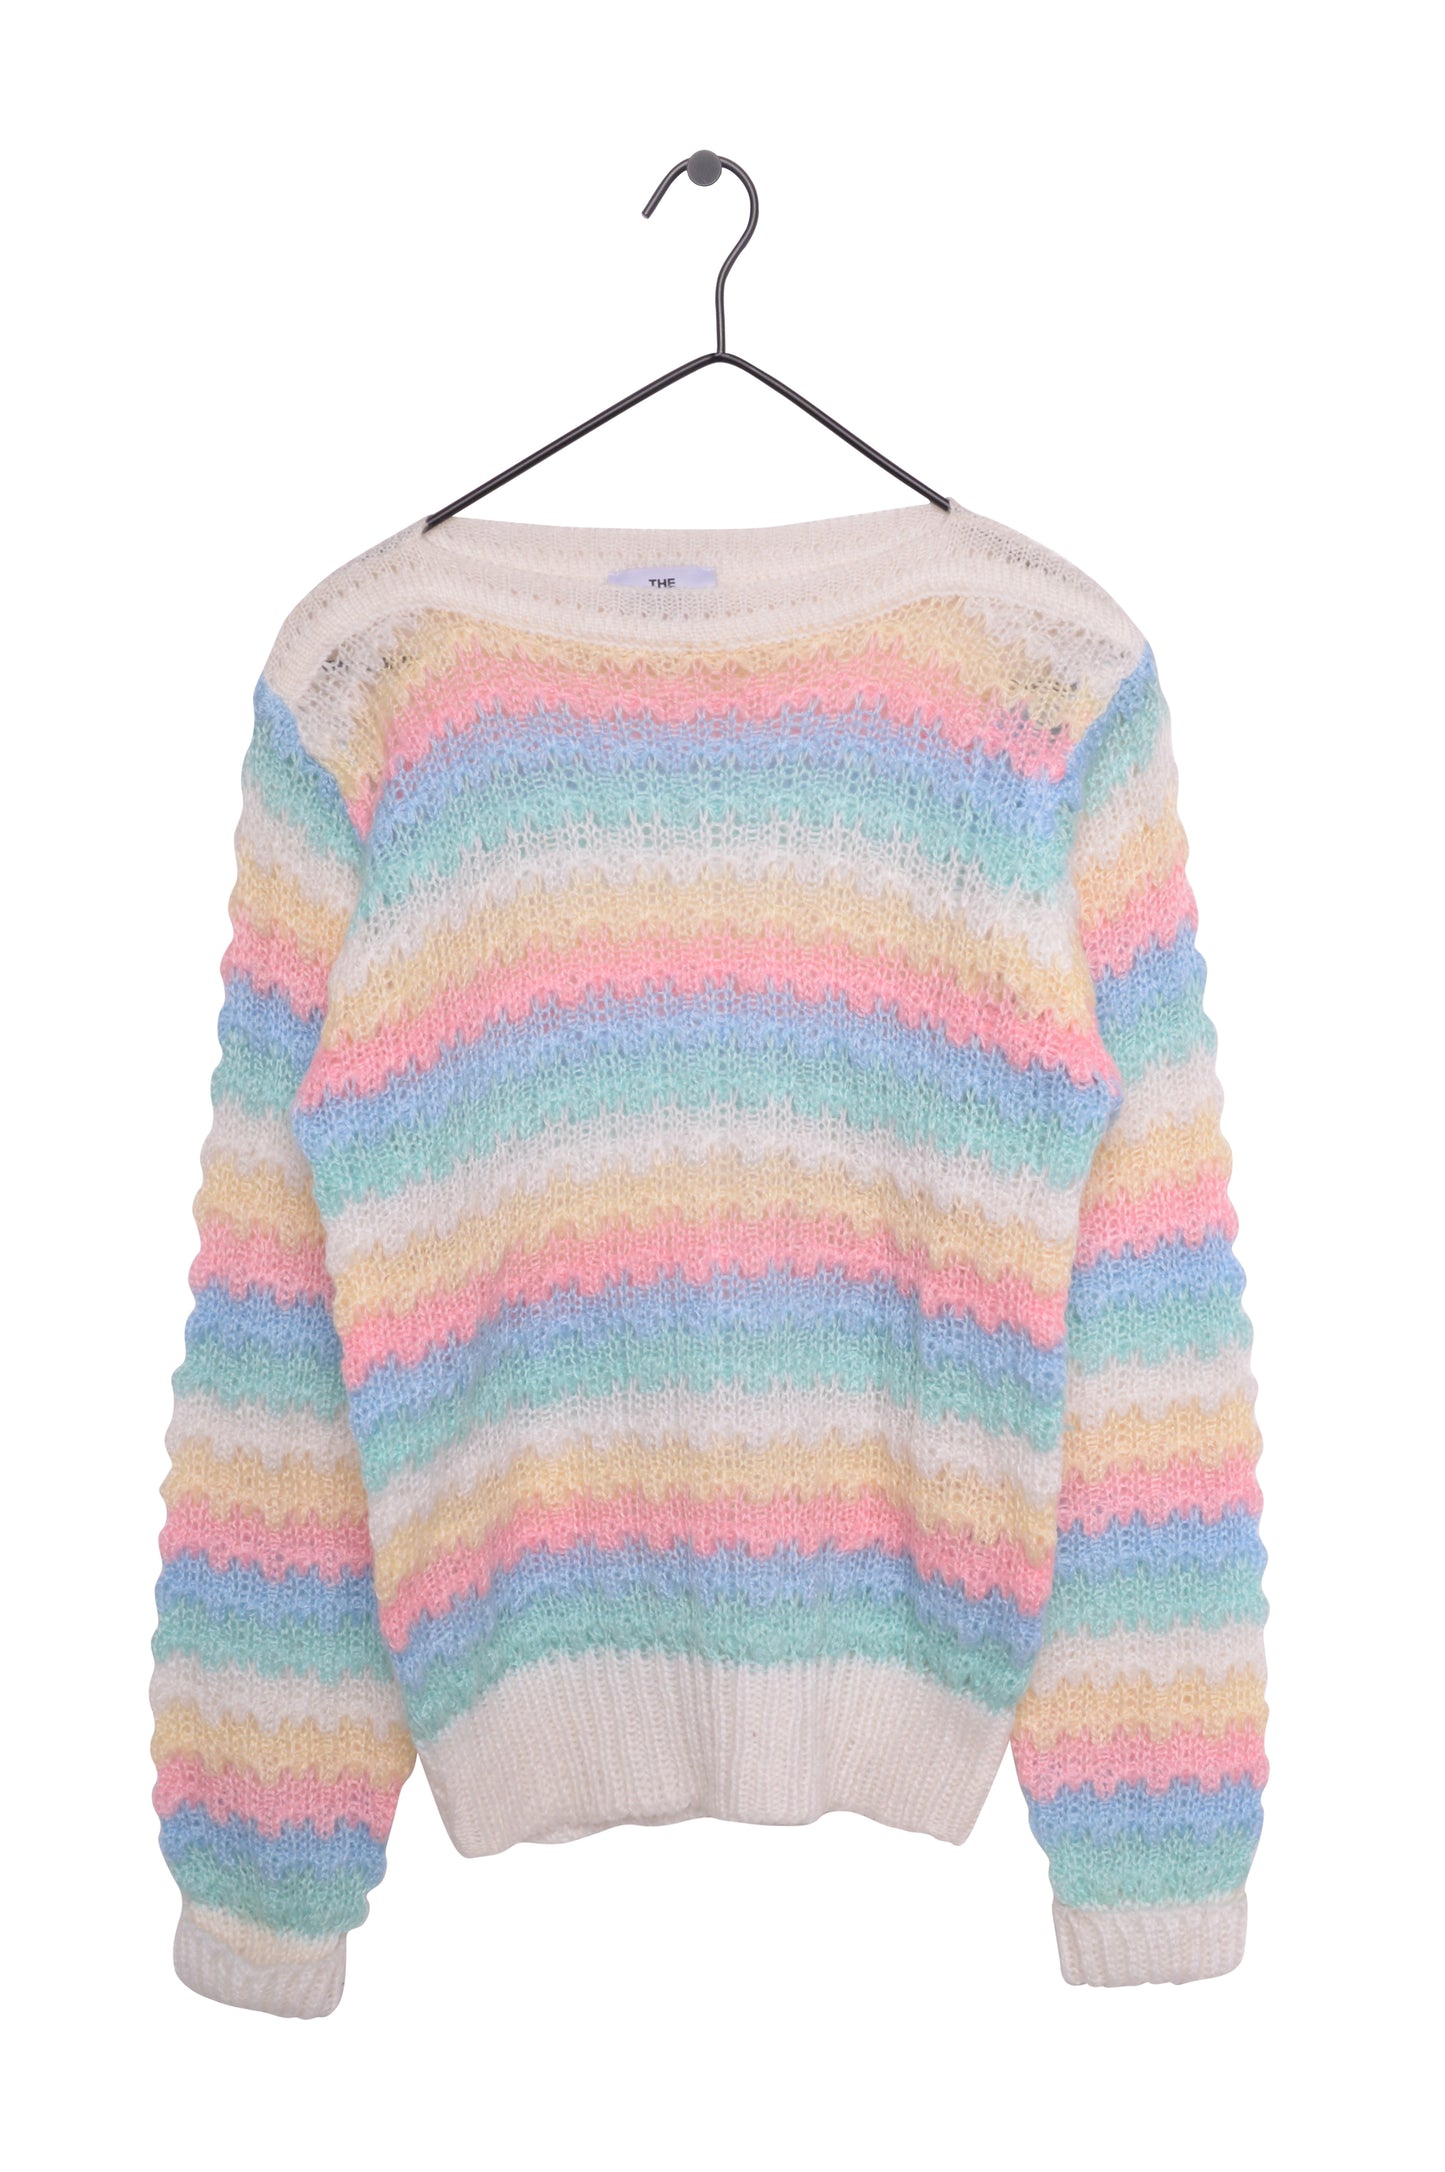 Handmade Pastel Rainbow Sweater